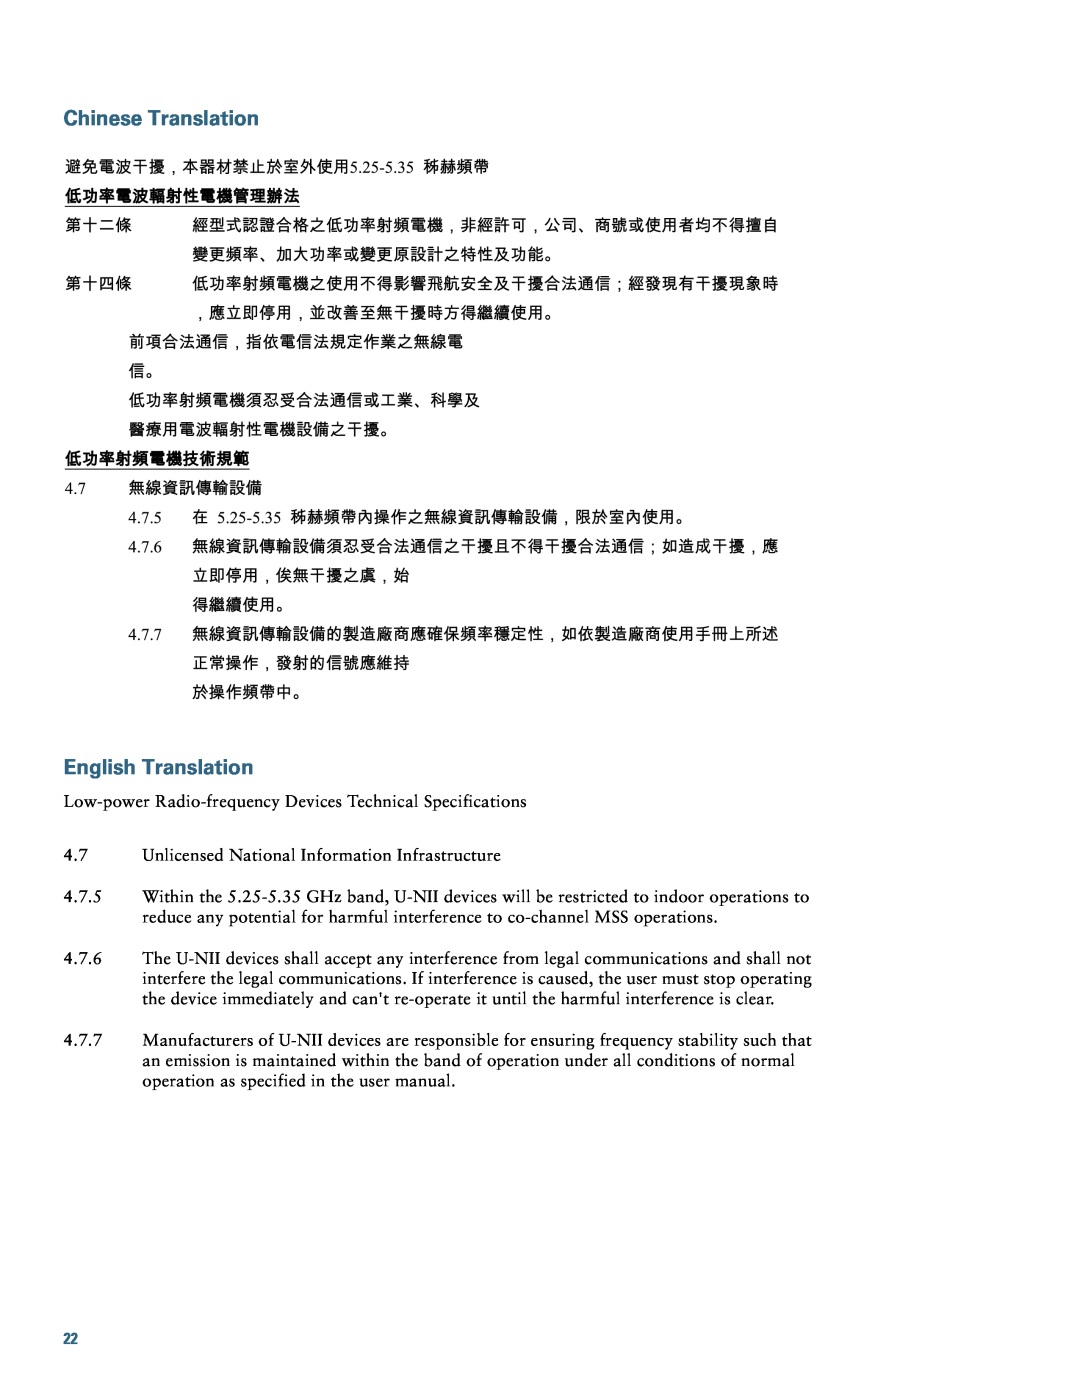 Cisco Systems AIRCAP702IAK9 specifications Chinese Translation English Translation 